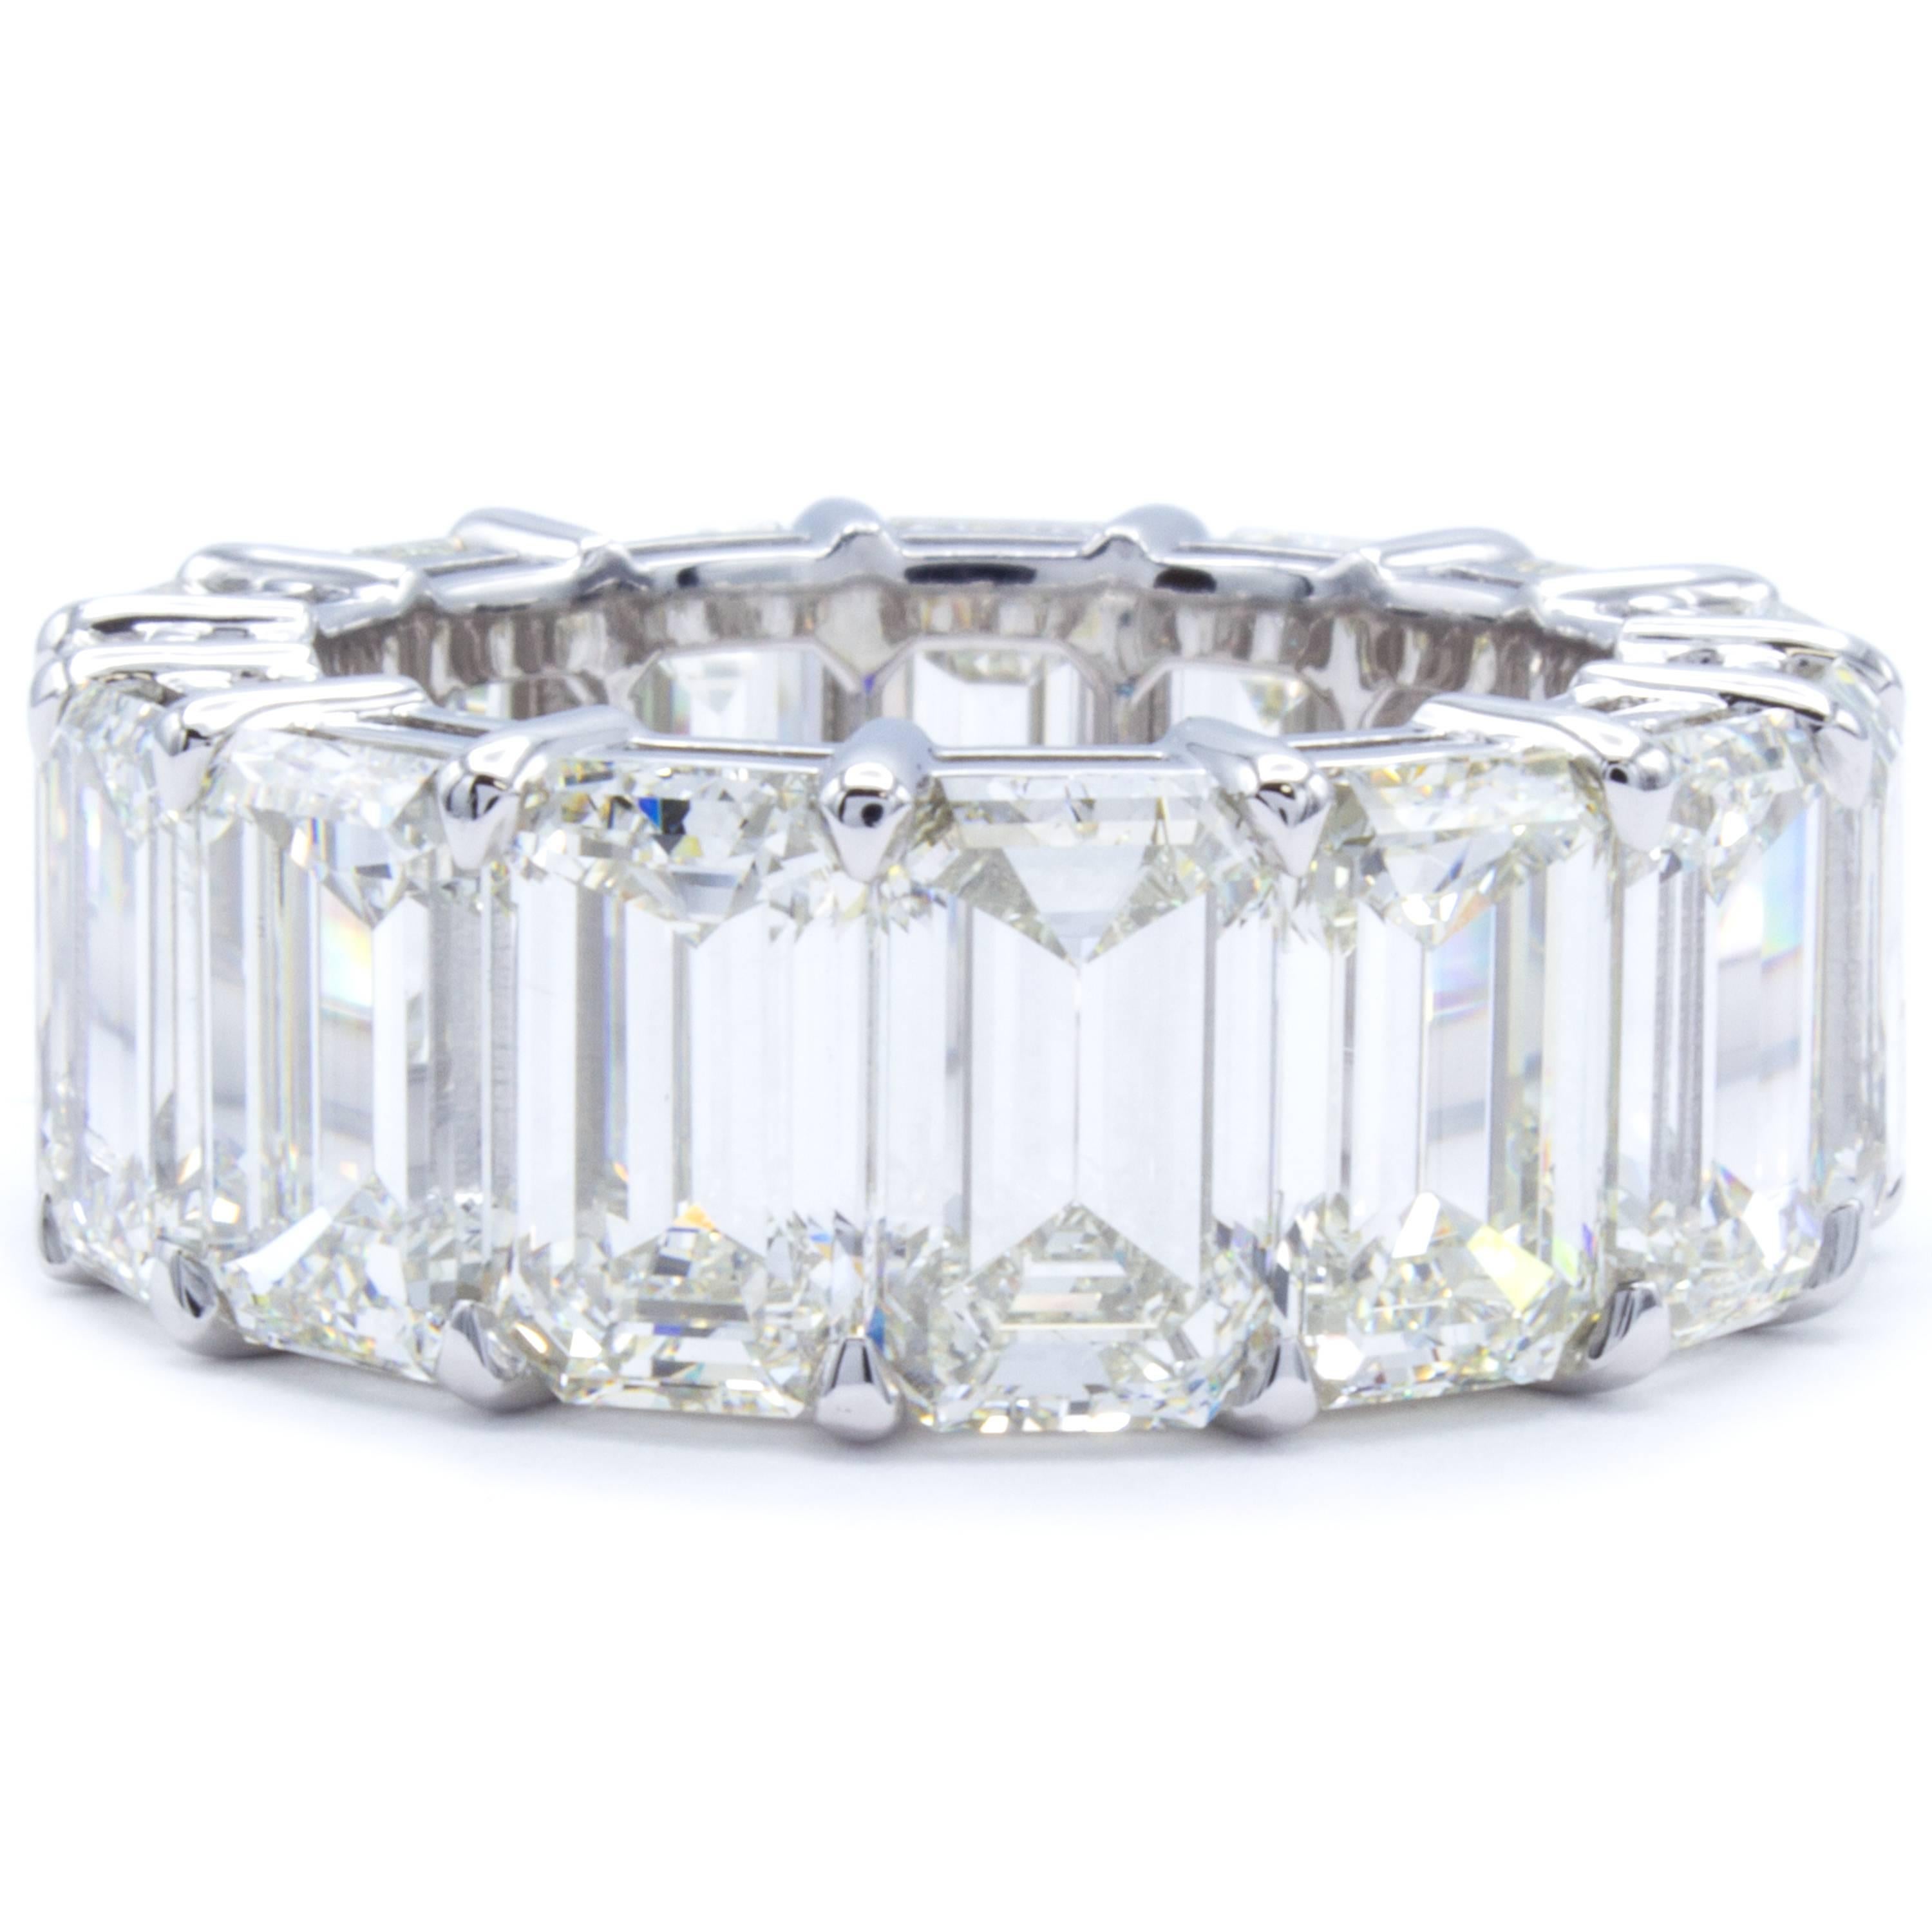 17 carat emerald cut diamond ring